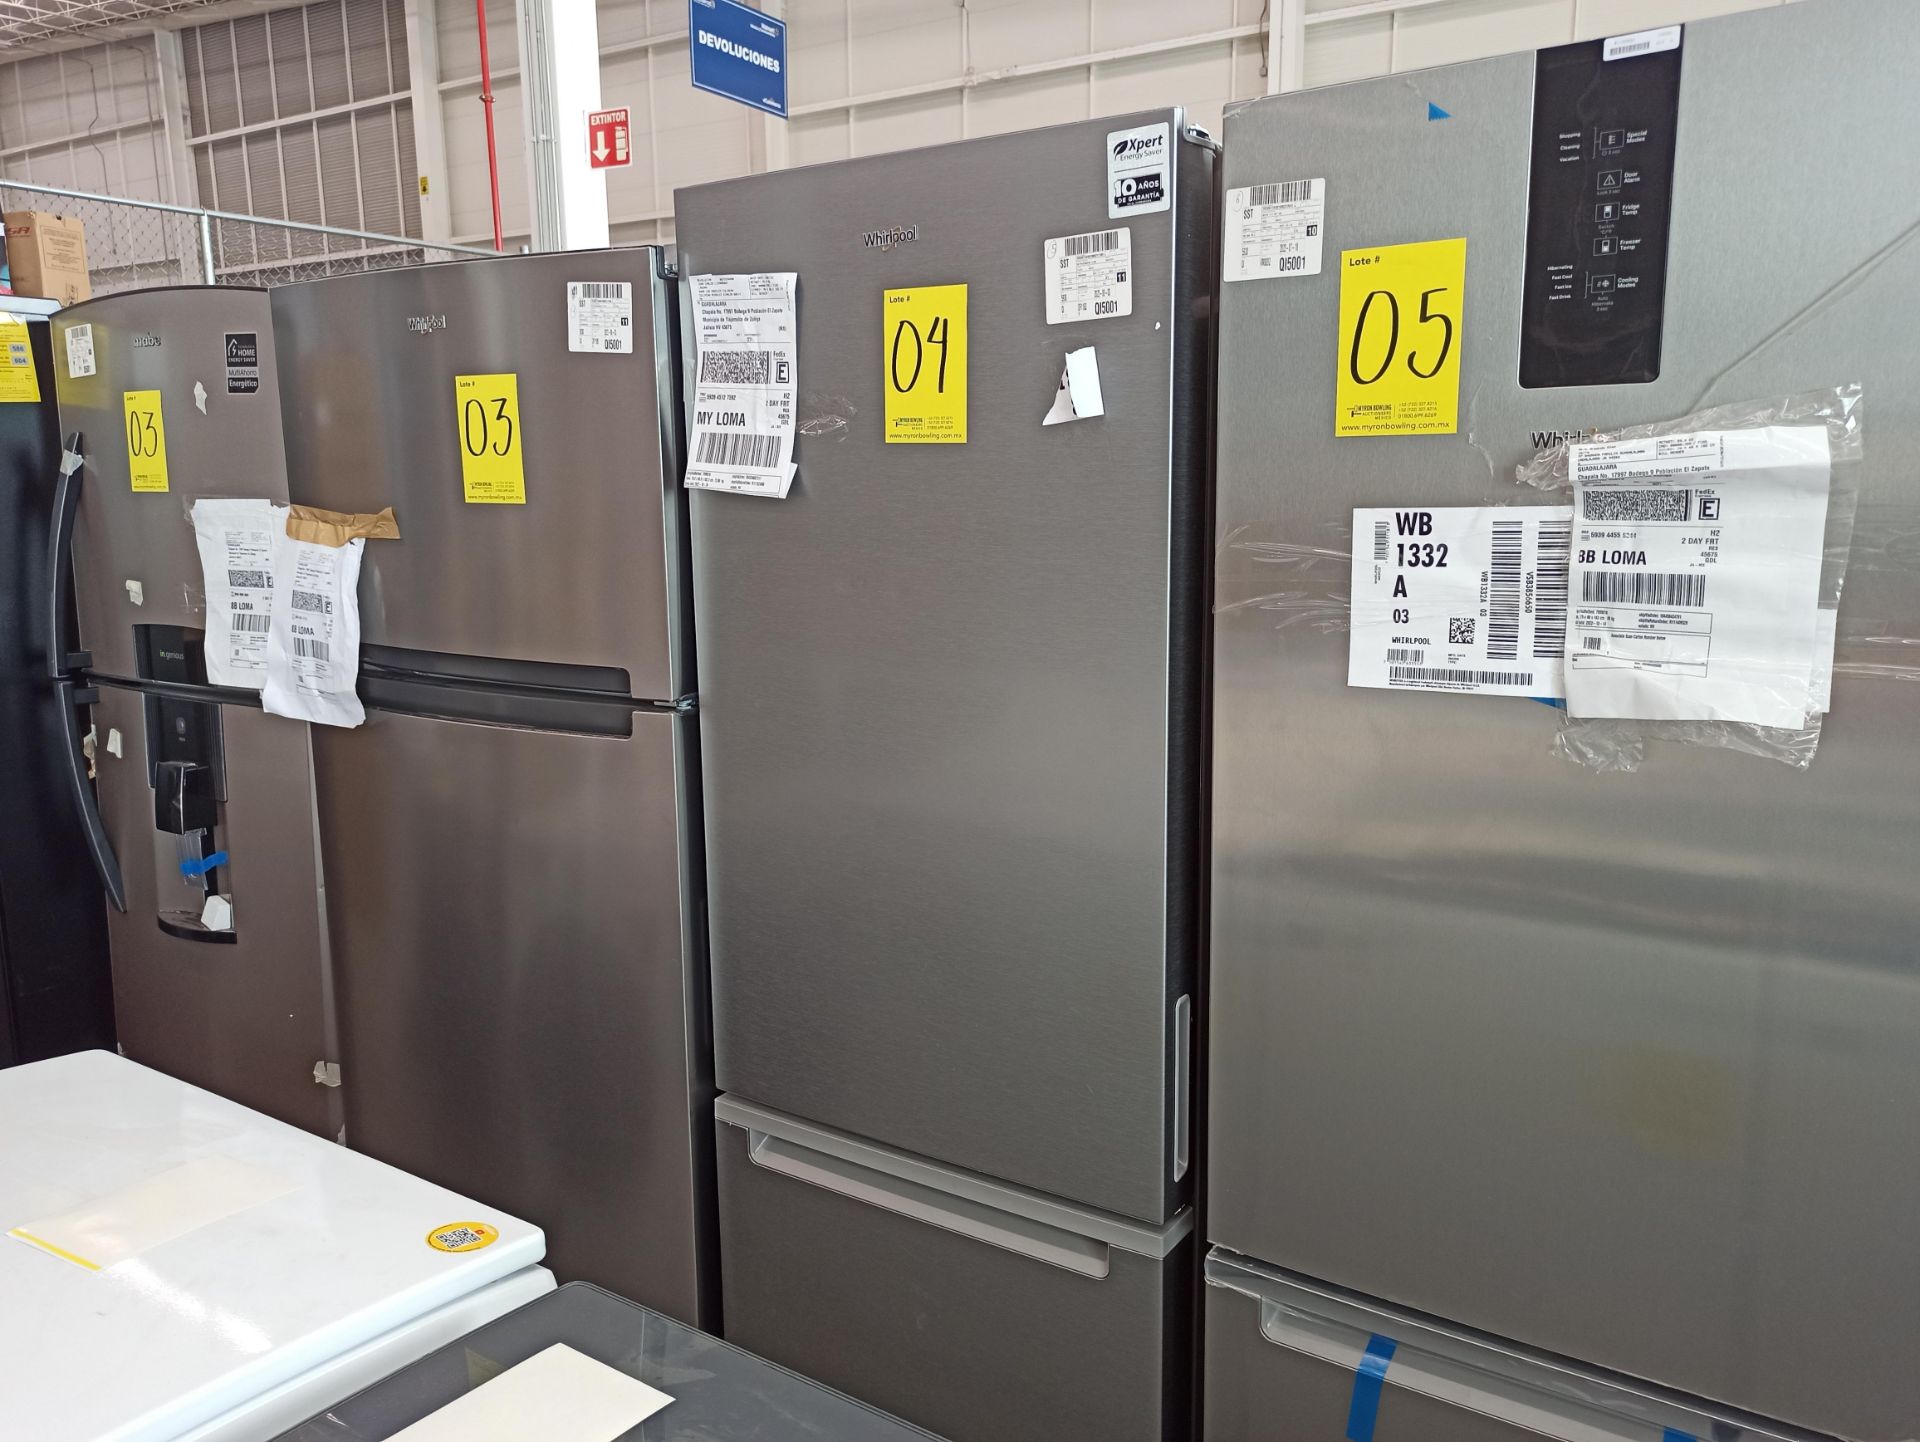 1 Refrigerador Marca WHIRLPOOL, Modelo WB133D, Serie VSB3236462, Color GRIS, LB-217189, Favor de In - Image 4 of 9